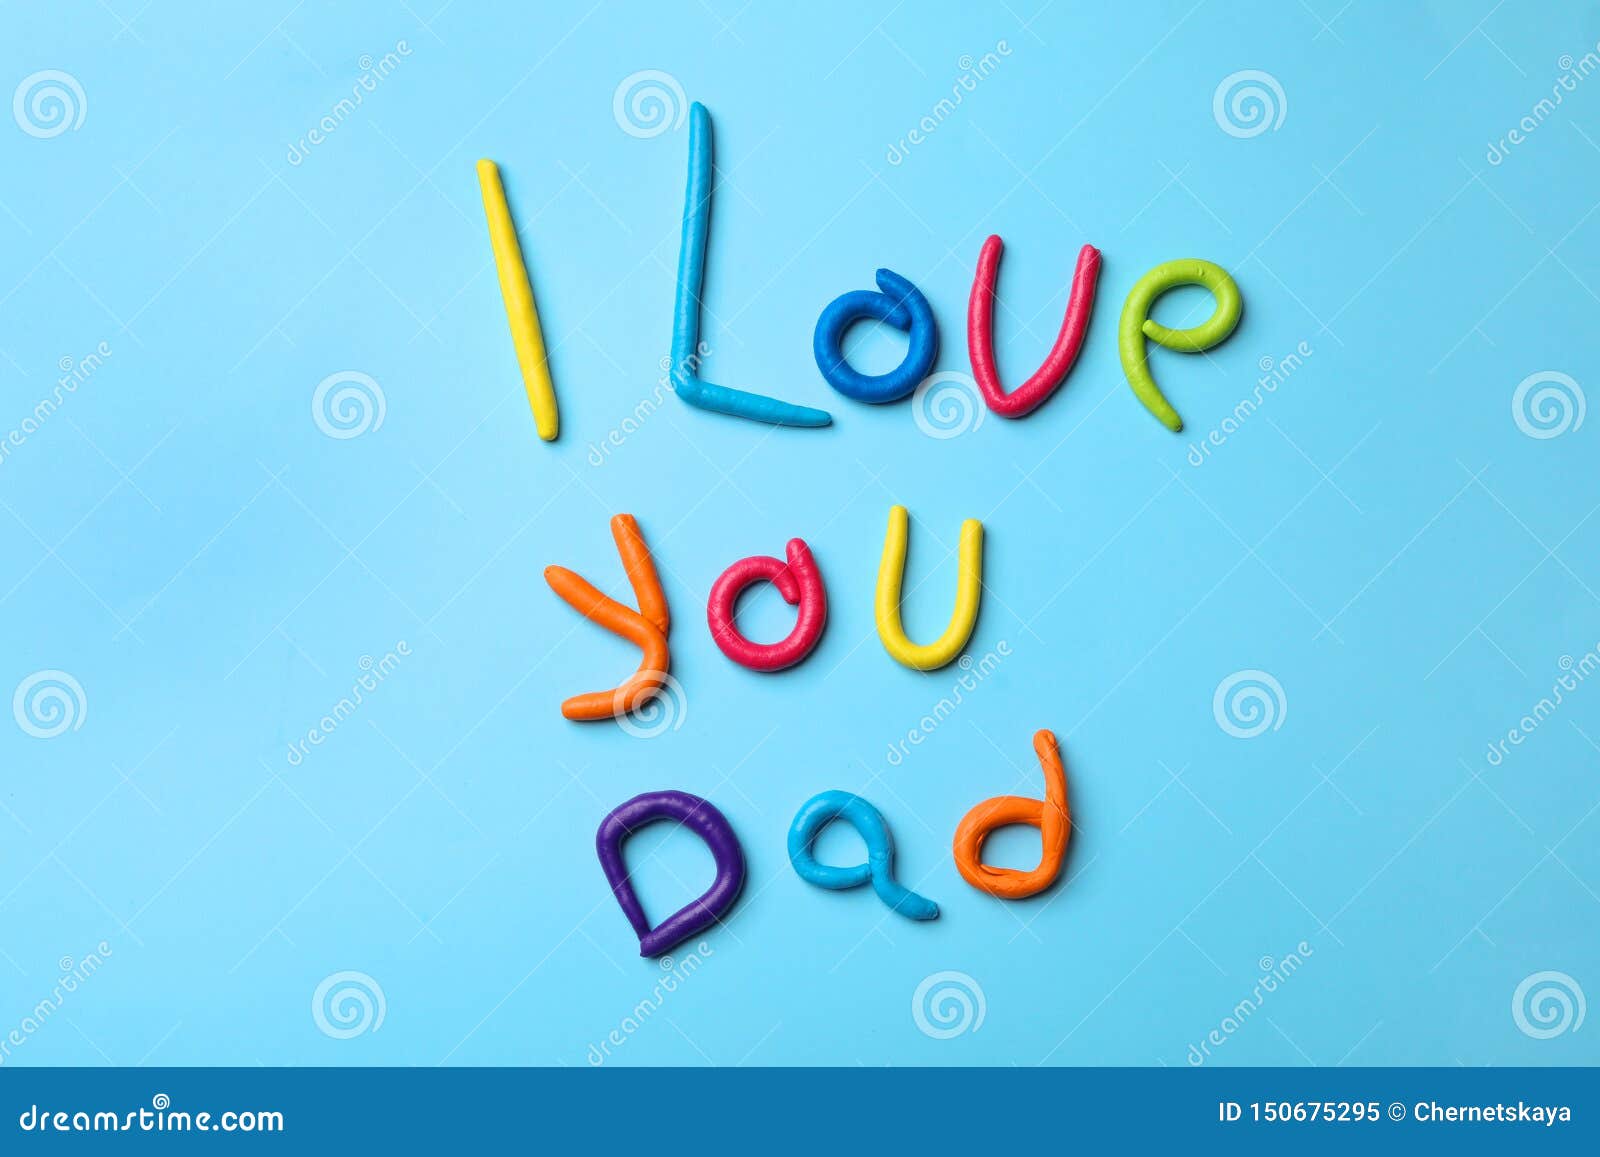 Phrase I Love You Dad Made Of Plasticine On Color Background Stock Image Image Of Encourage Aspiration